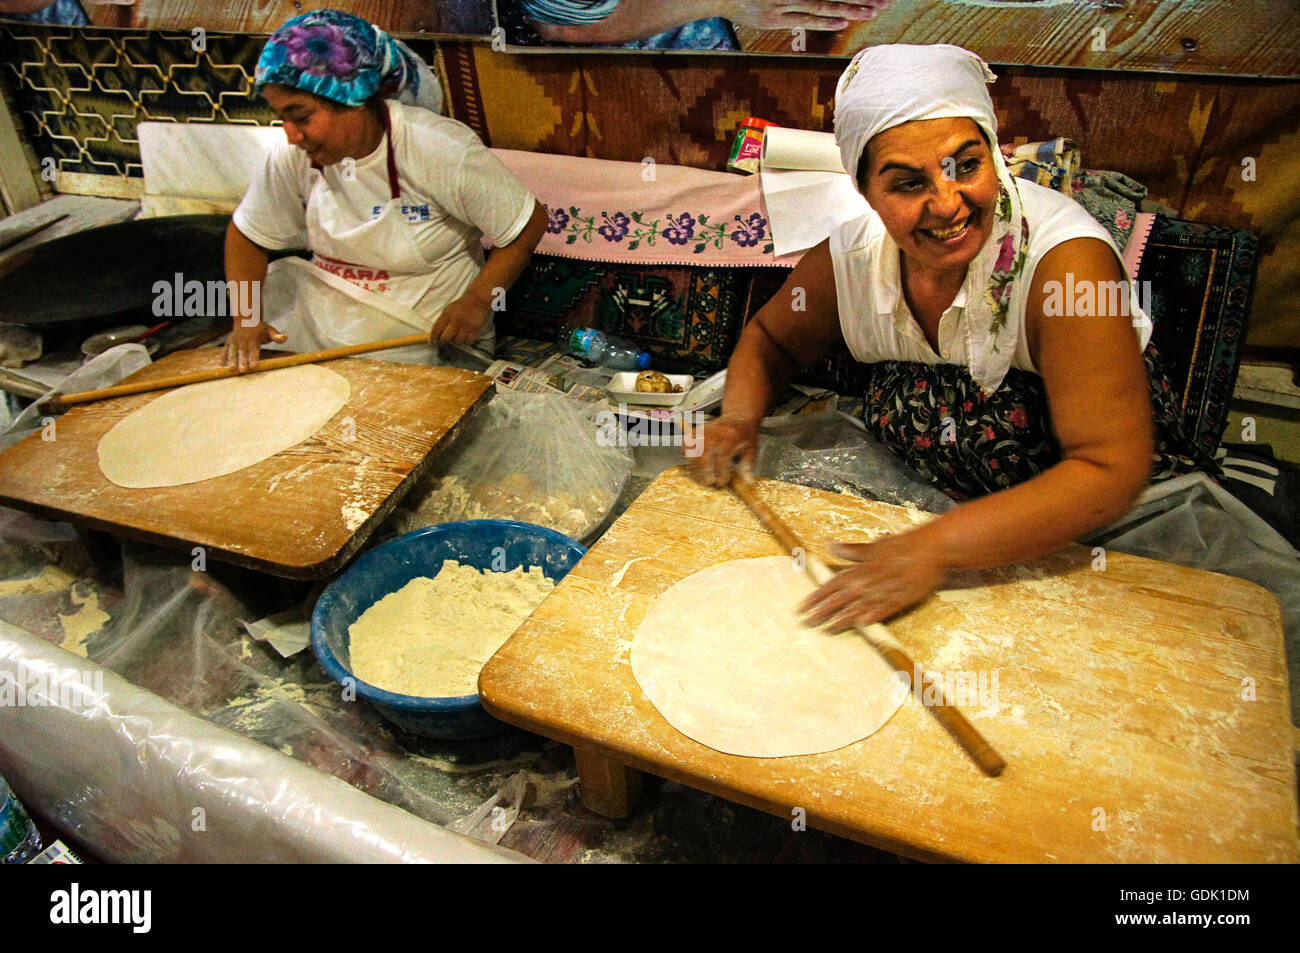 Preparing 'boreks' at Antalya, Turkey. Stock Photo